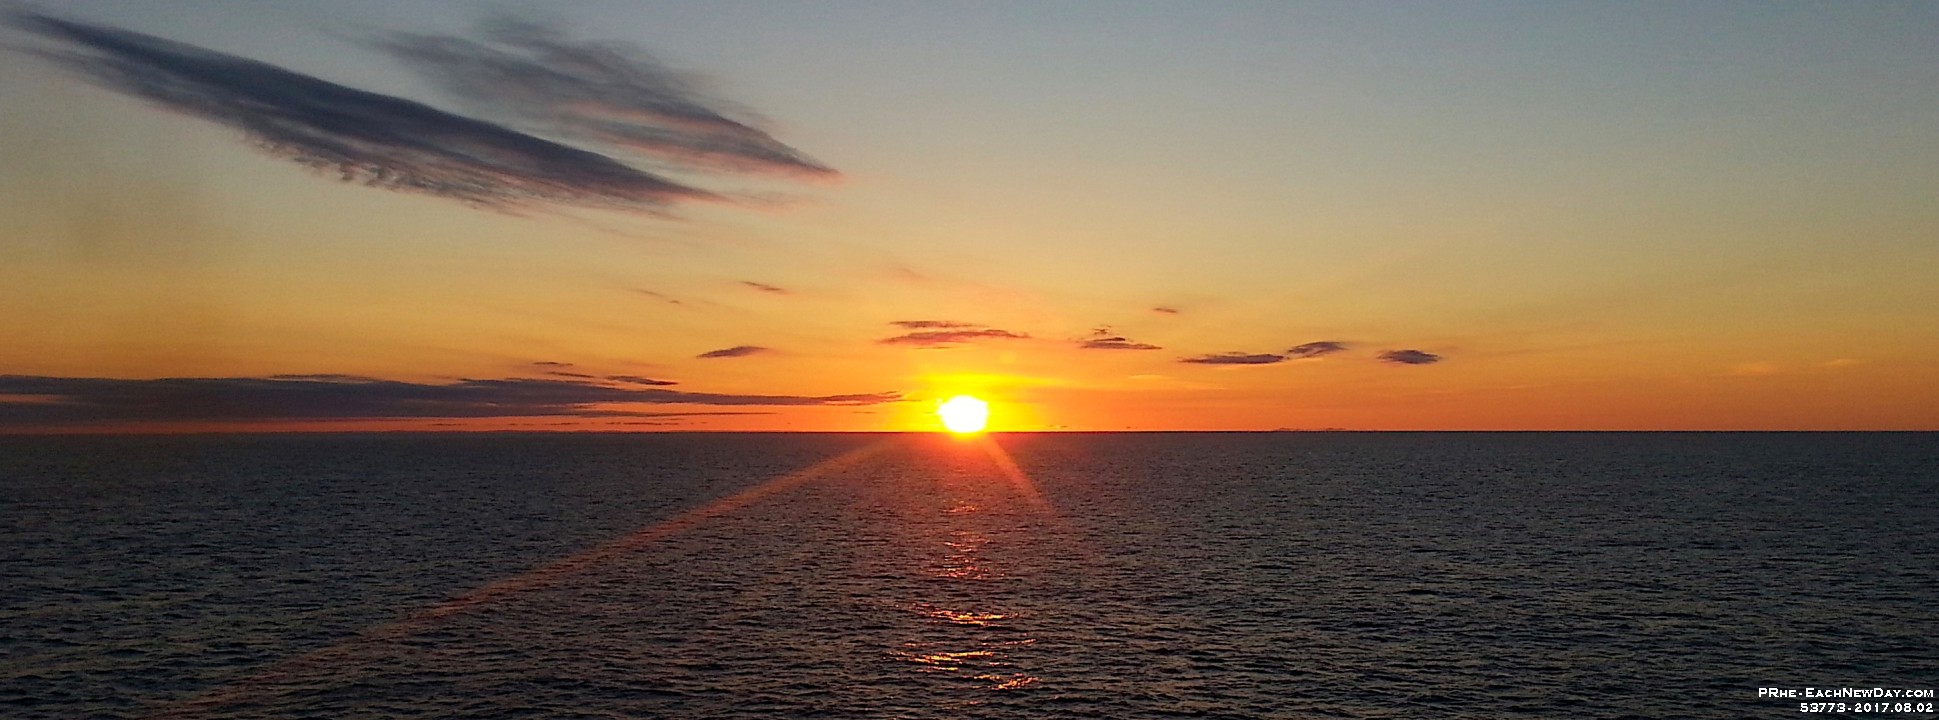 53773RoCrLeUsm - Sunset on the North Atlantic